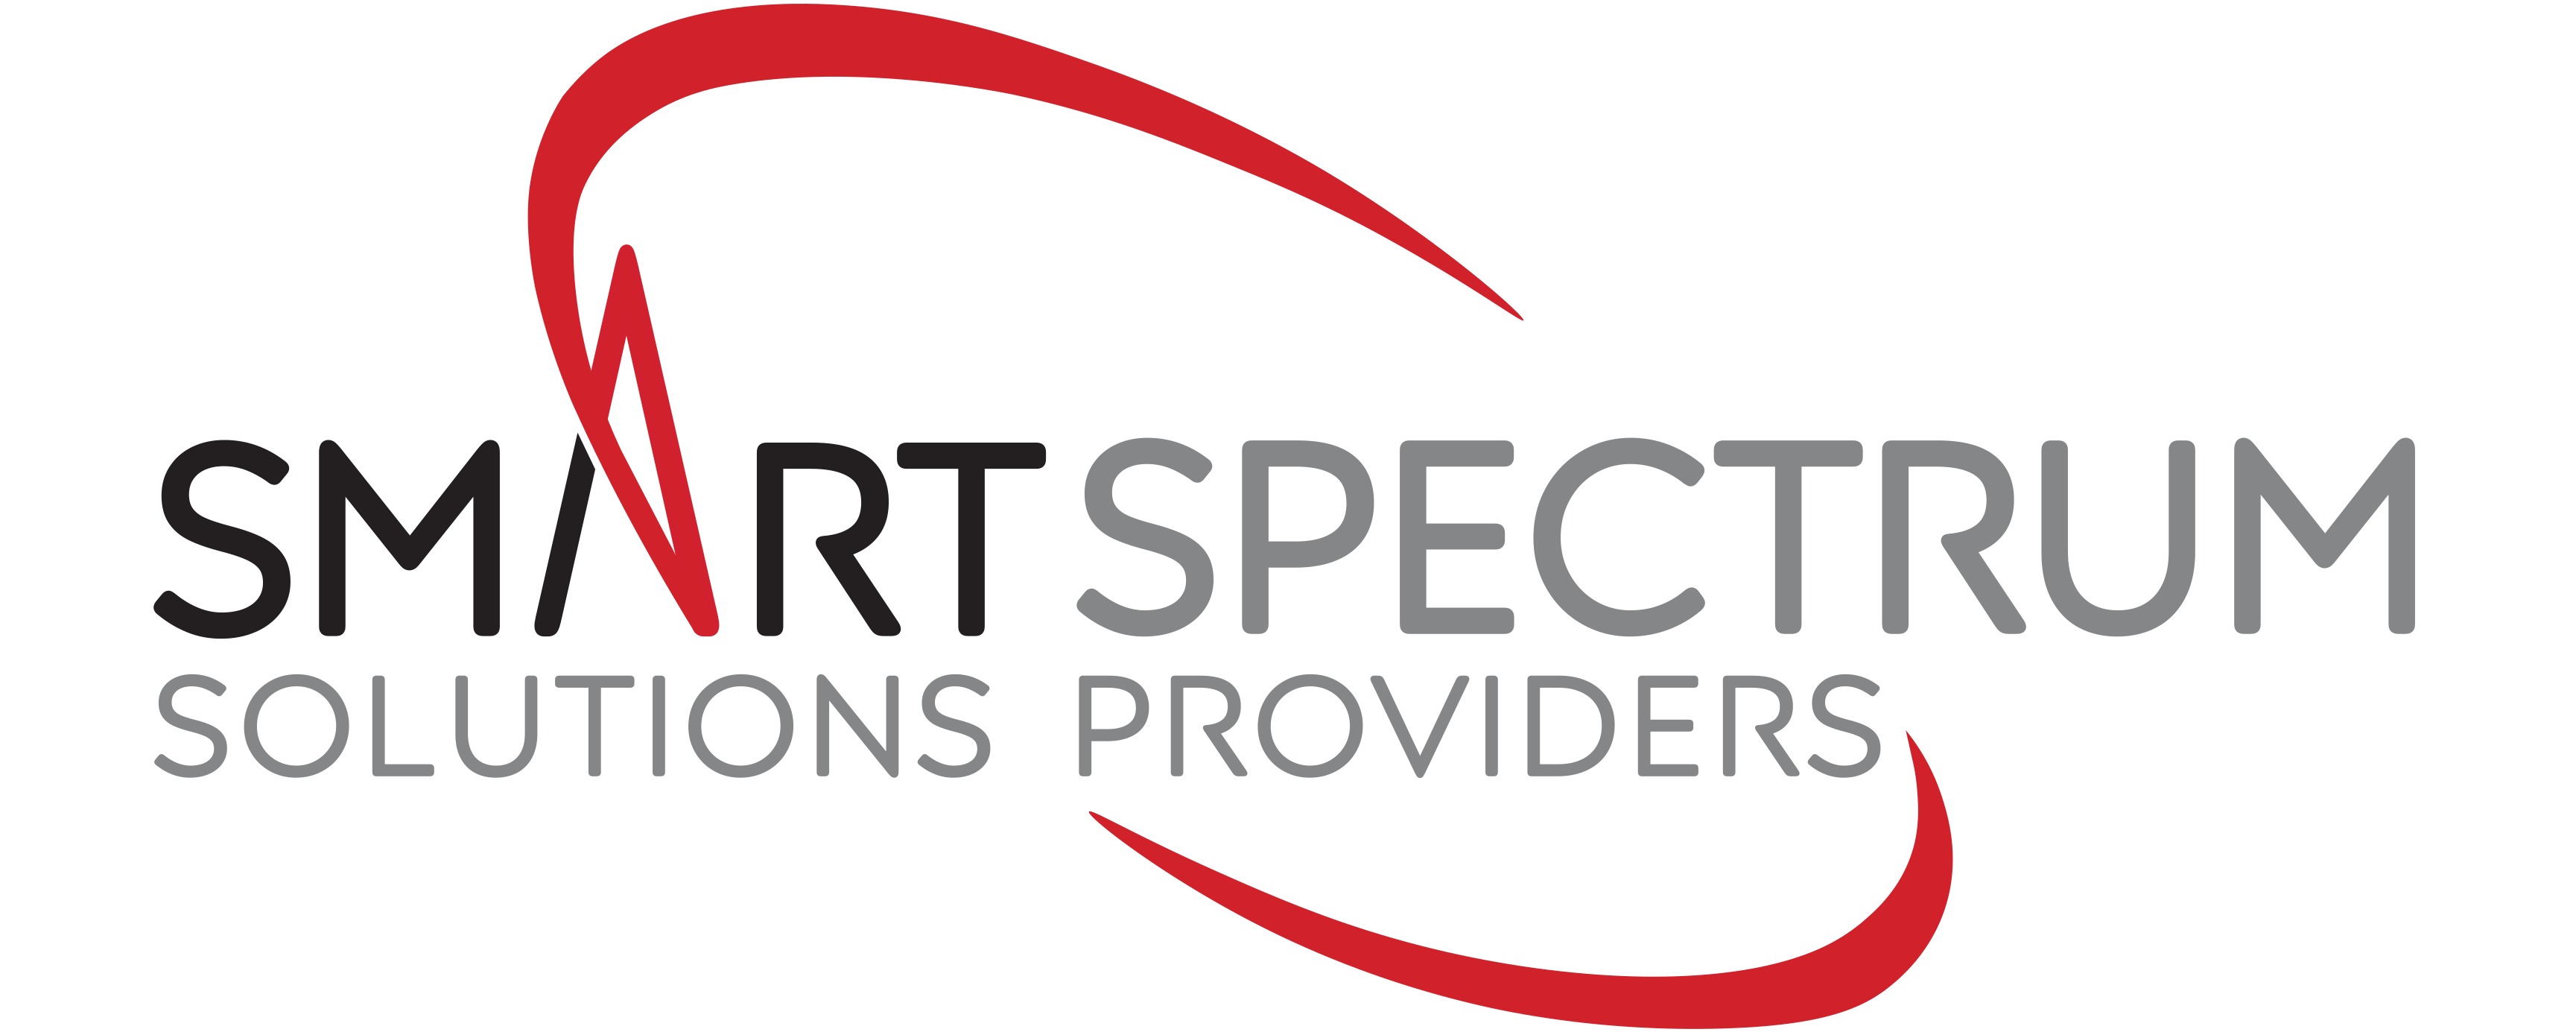 Smart Spectrum Solutions Providers logo